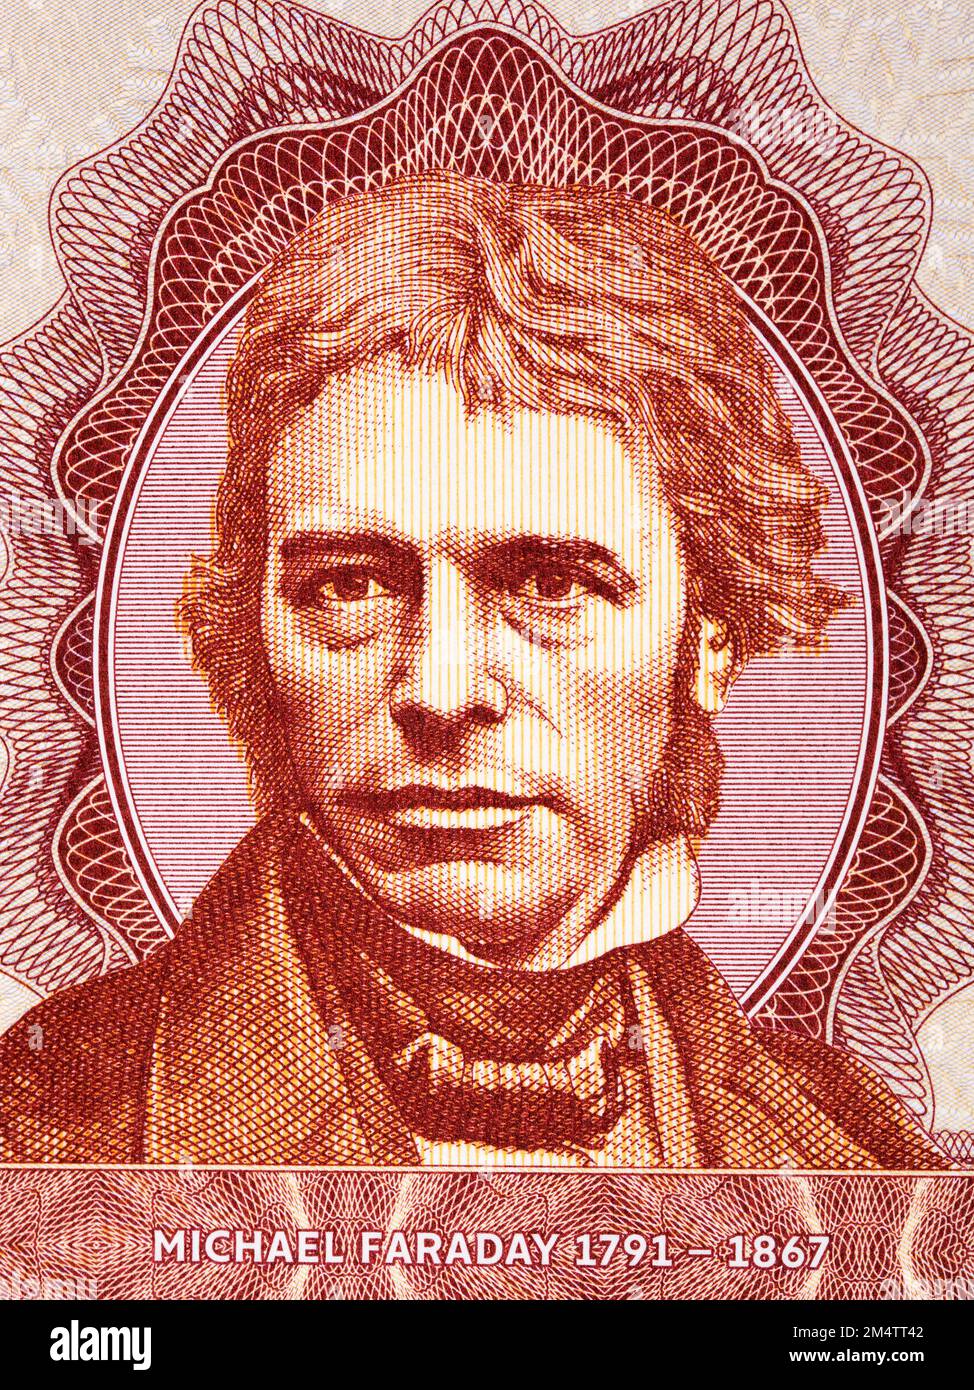 Michael Faraday a portrait from English  money Stock Photo